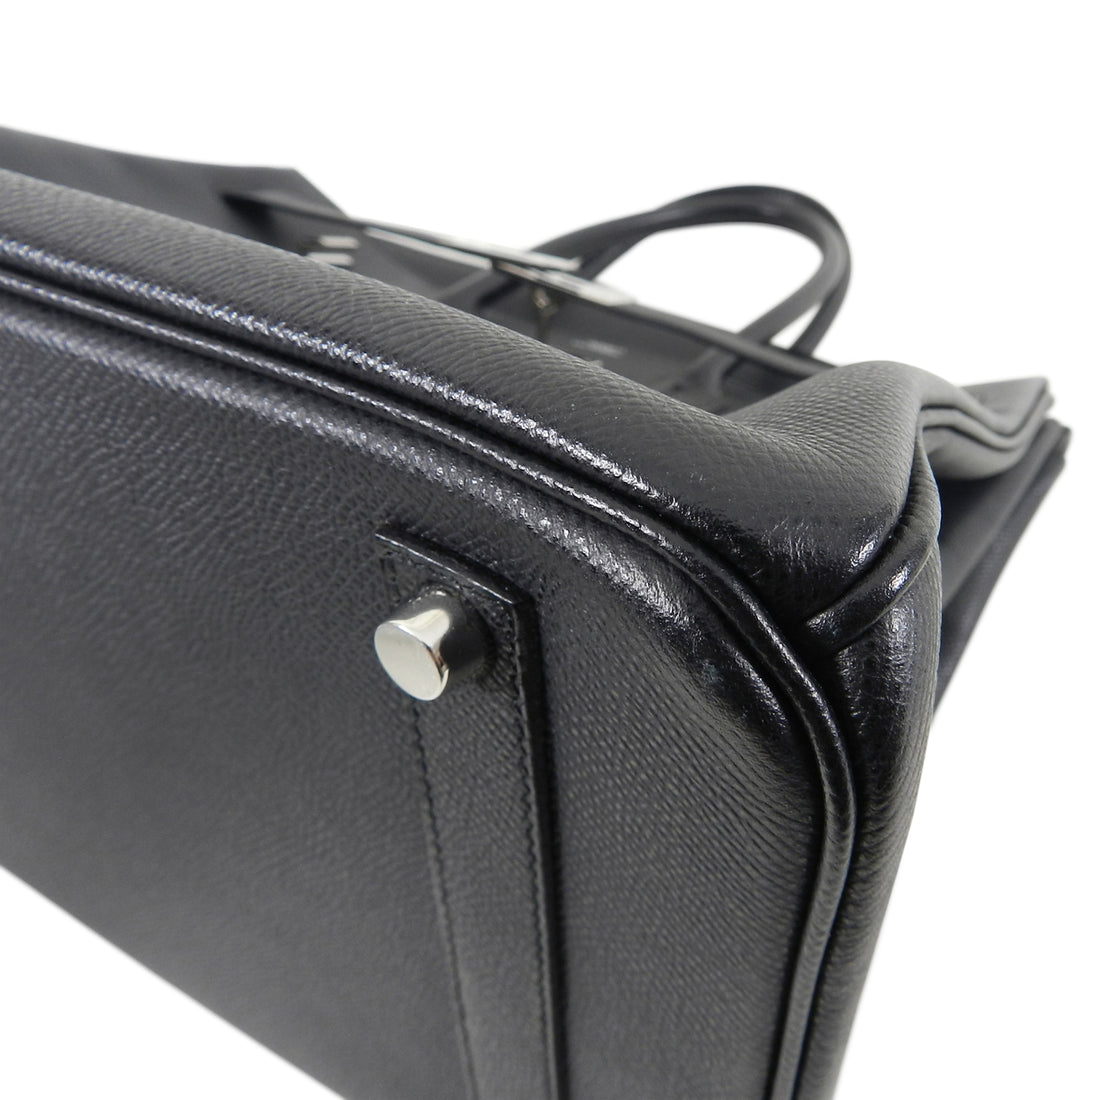 Hermès Black Birkin 35cm of Epsom Leather with Palladium Hardware, Handbags & Accessories Online, Ecommerce Retail